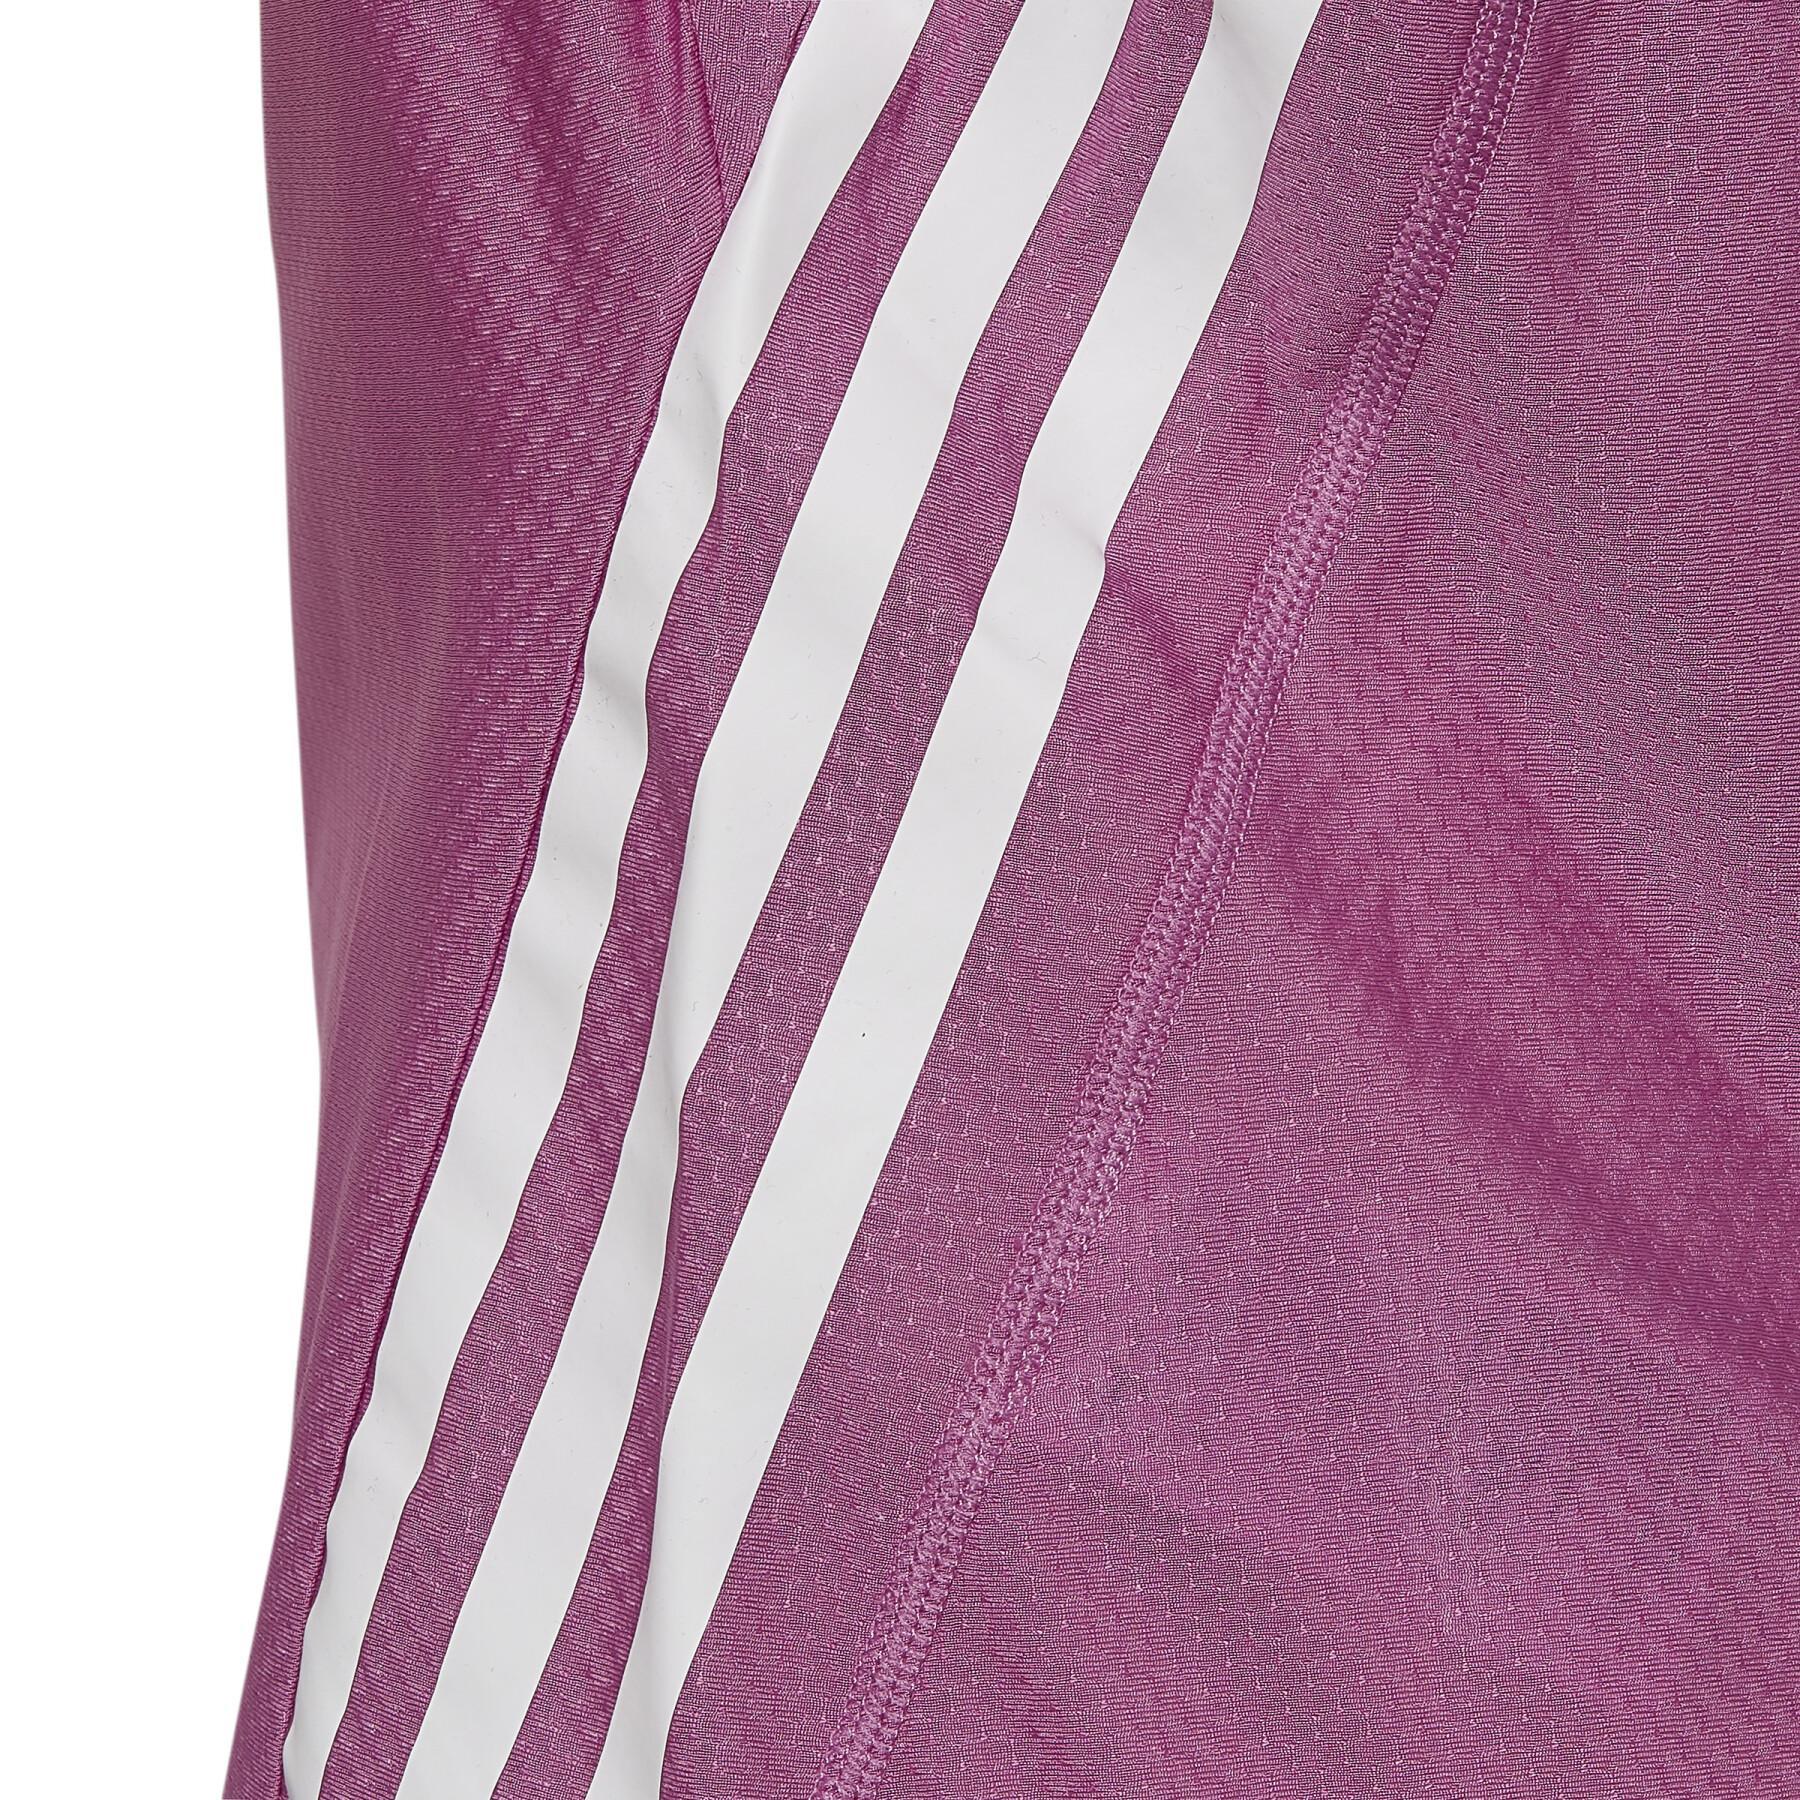 Girl's 3 stripes training shirt adidas Aeroready